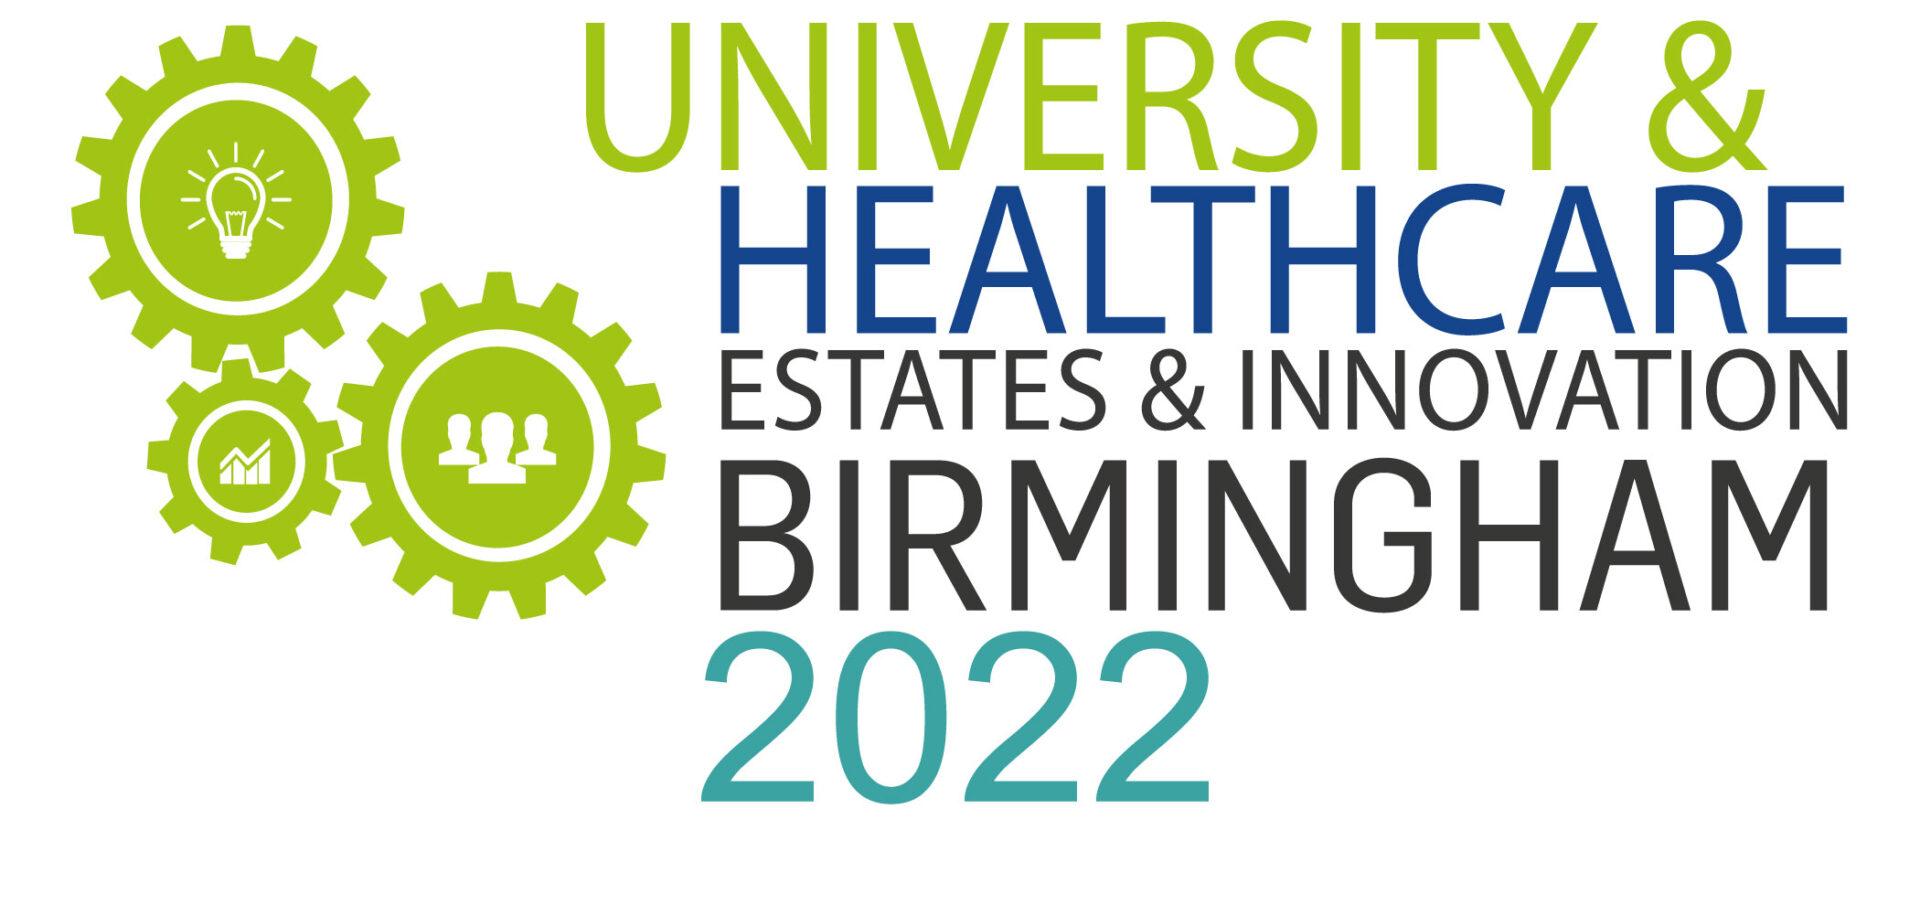 University and Healthcare Estates & Innovation 2022